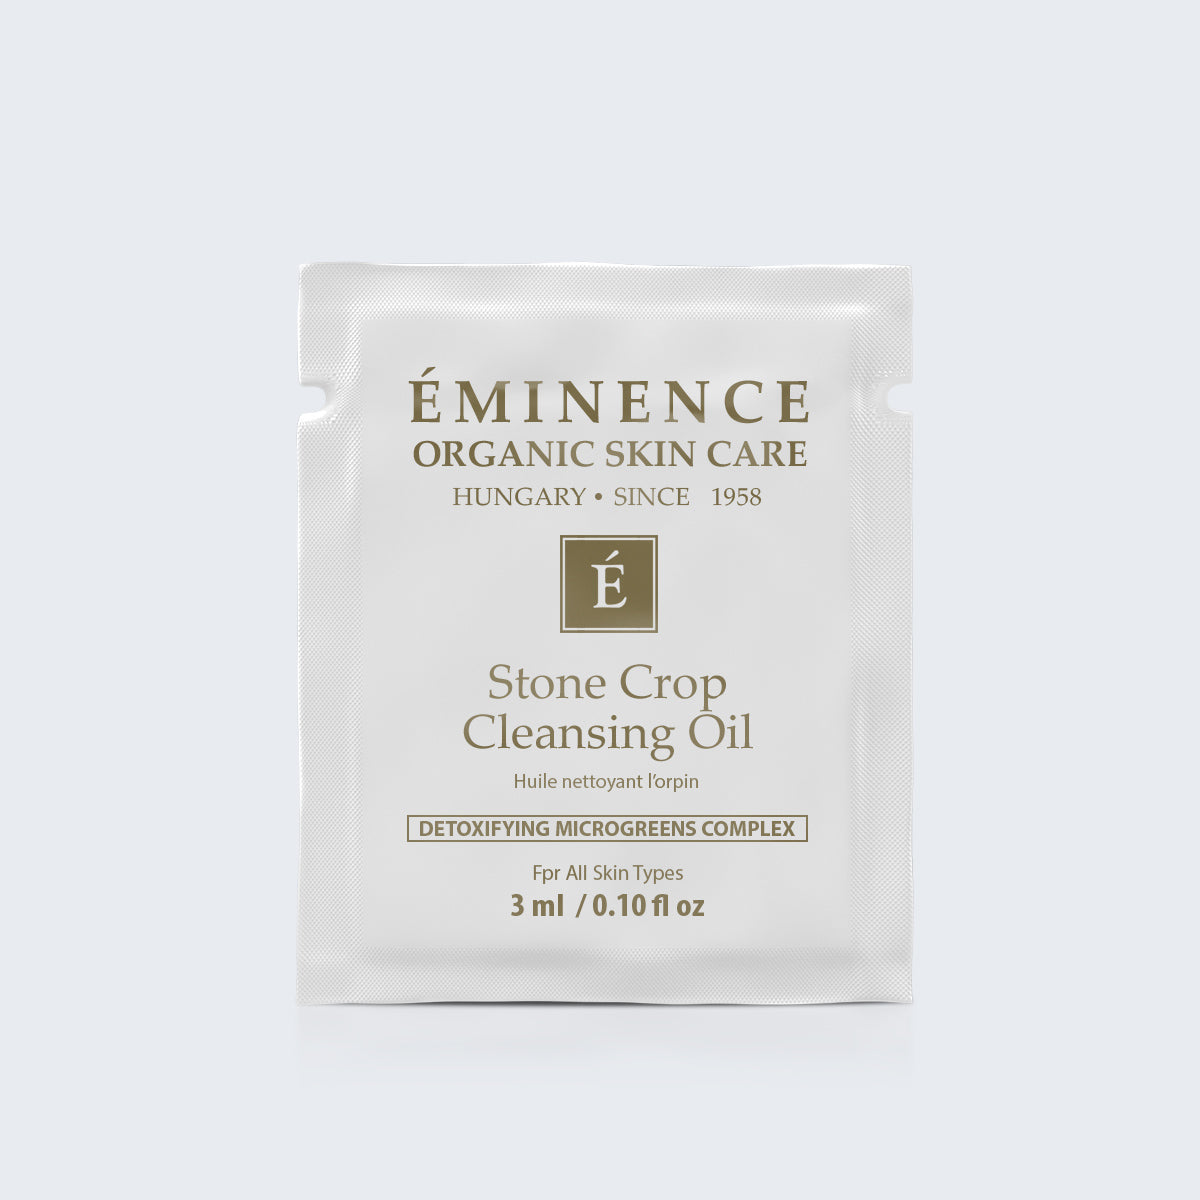 Eminence Organics Stone Crop Cleansing Oil Card Sample